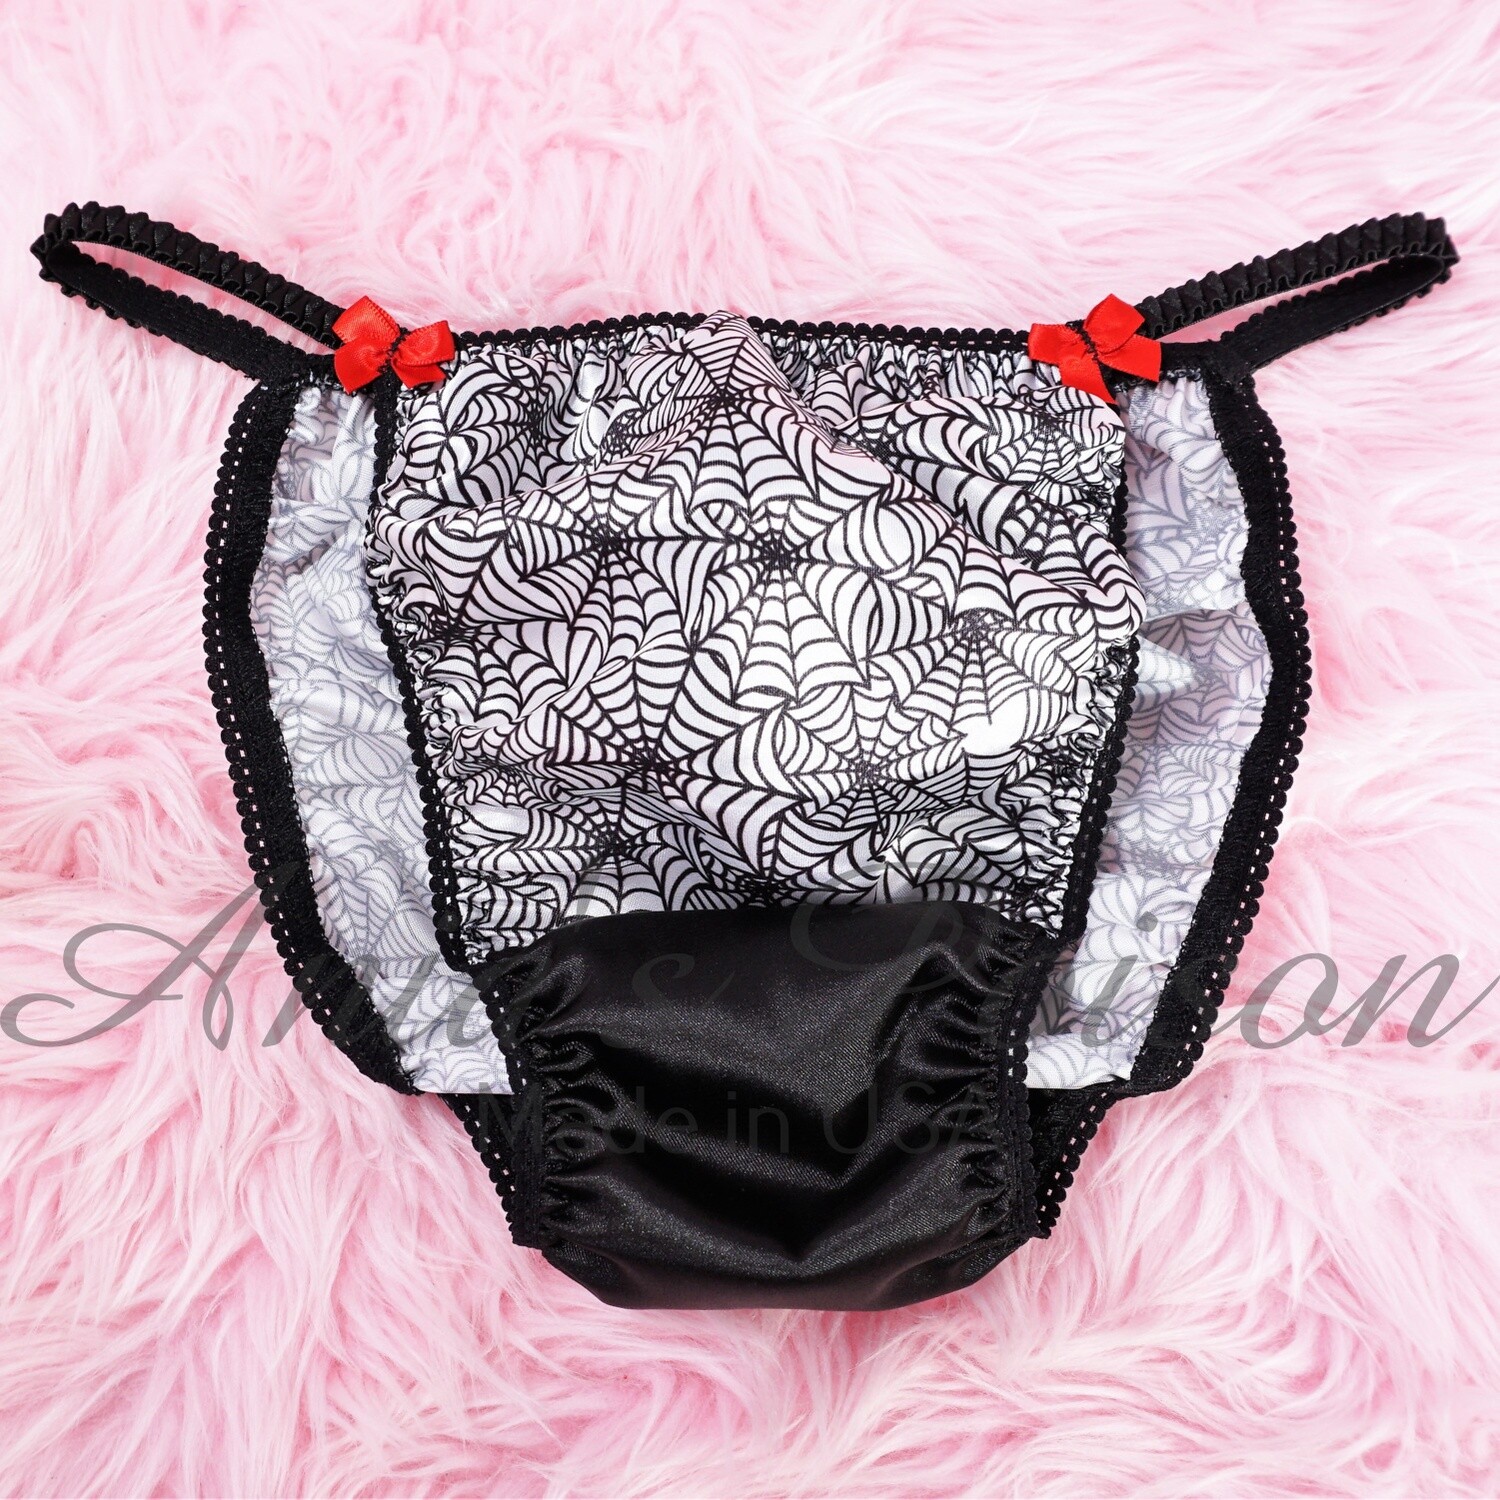 Satin Panties for Men Halloween Print Spiderweb Black and White 100% polyester SATIN string bikini panties Anias poison Cut